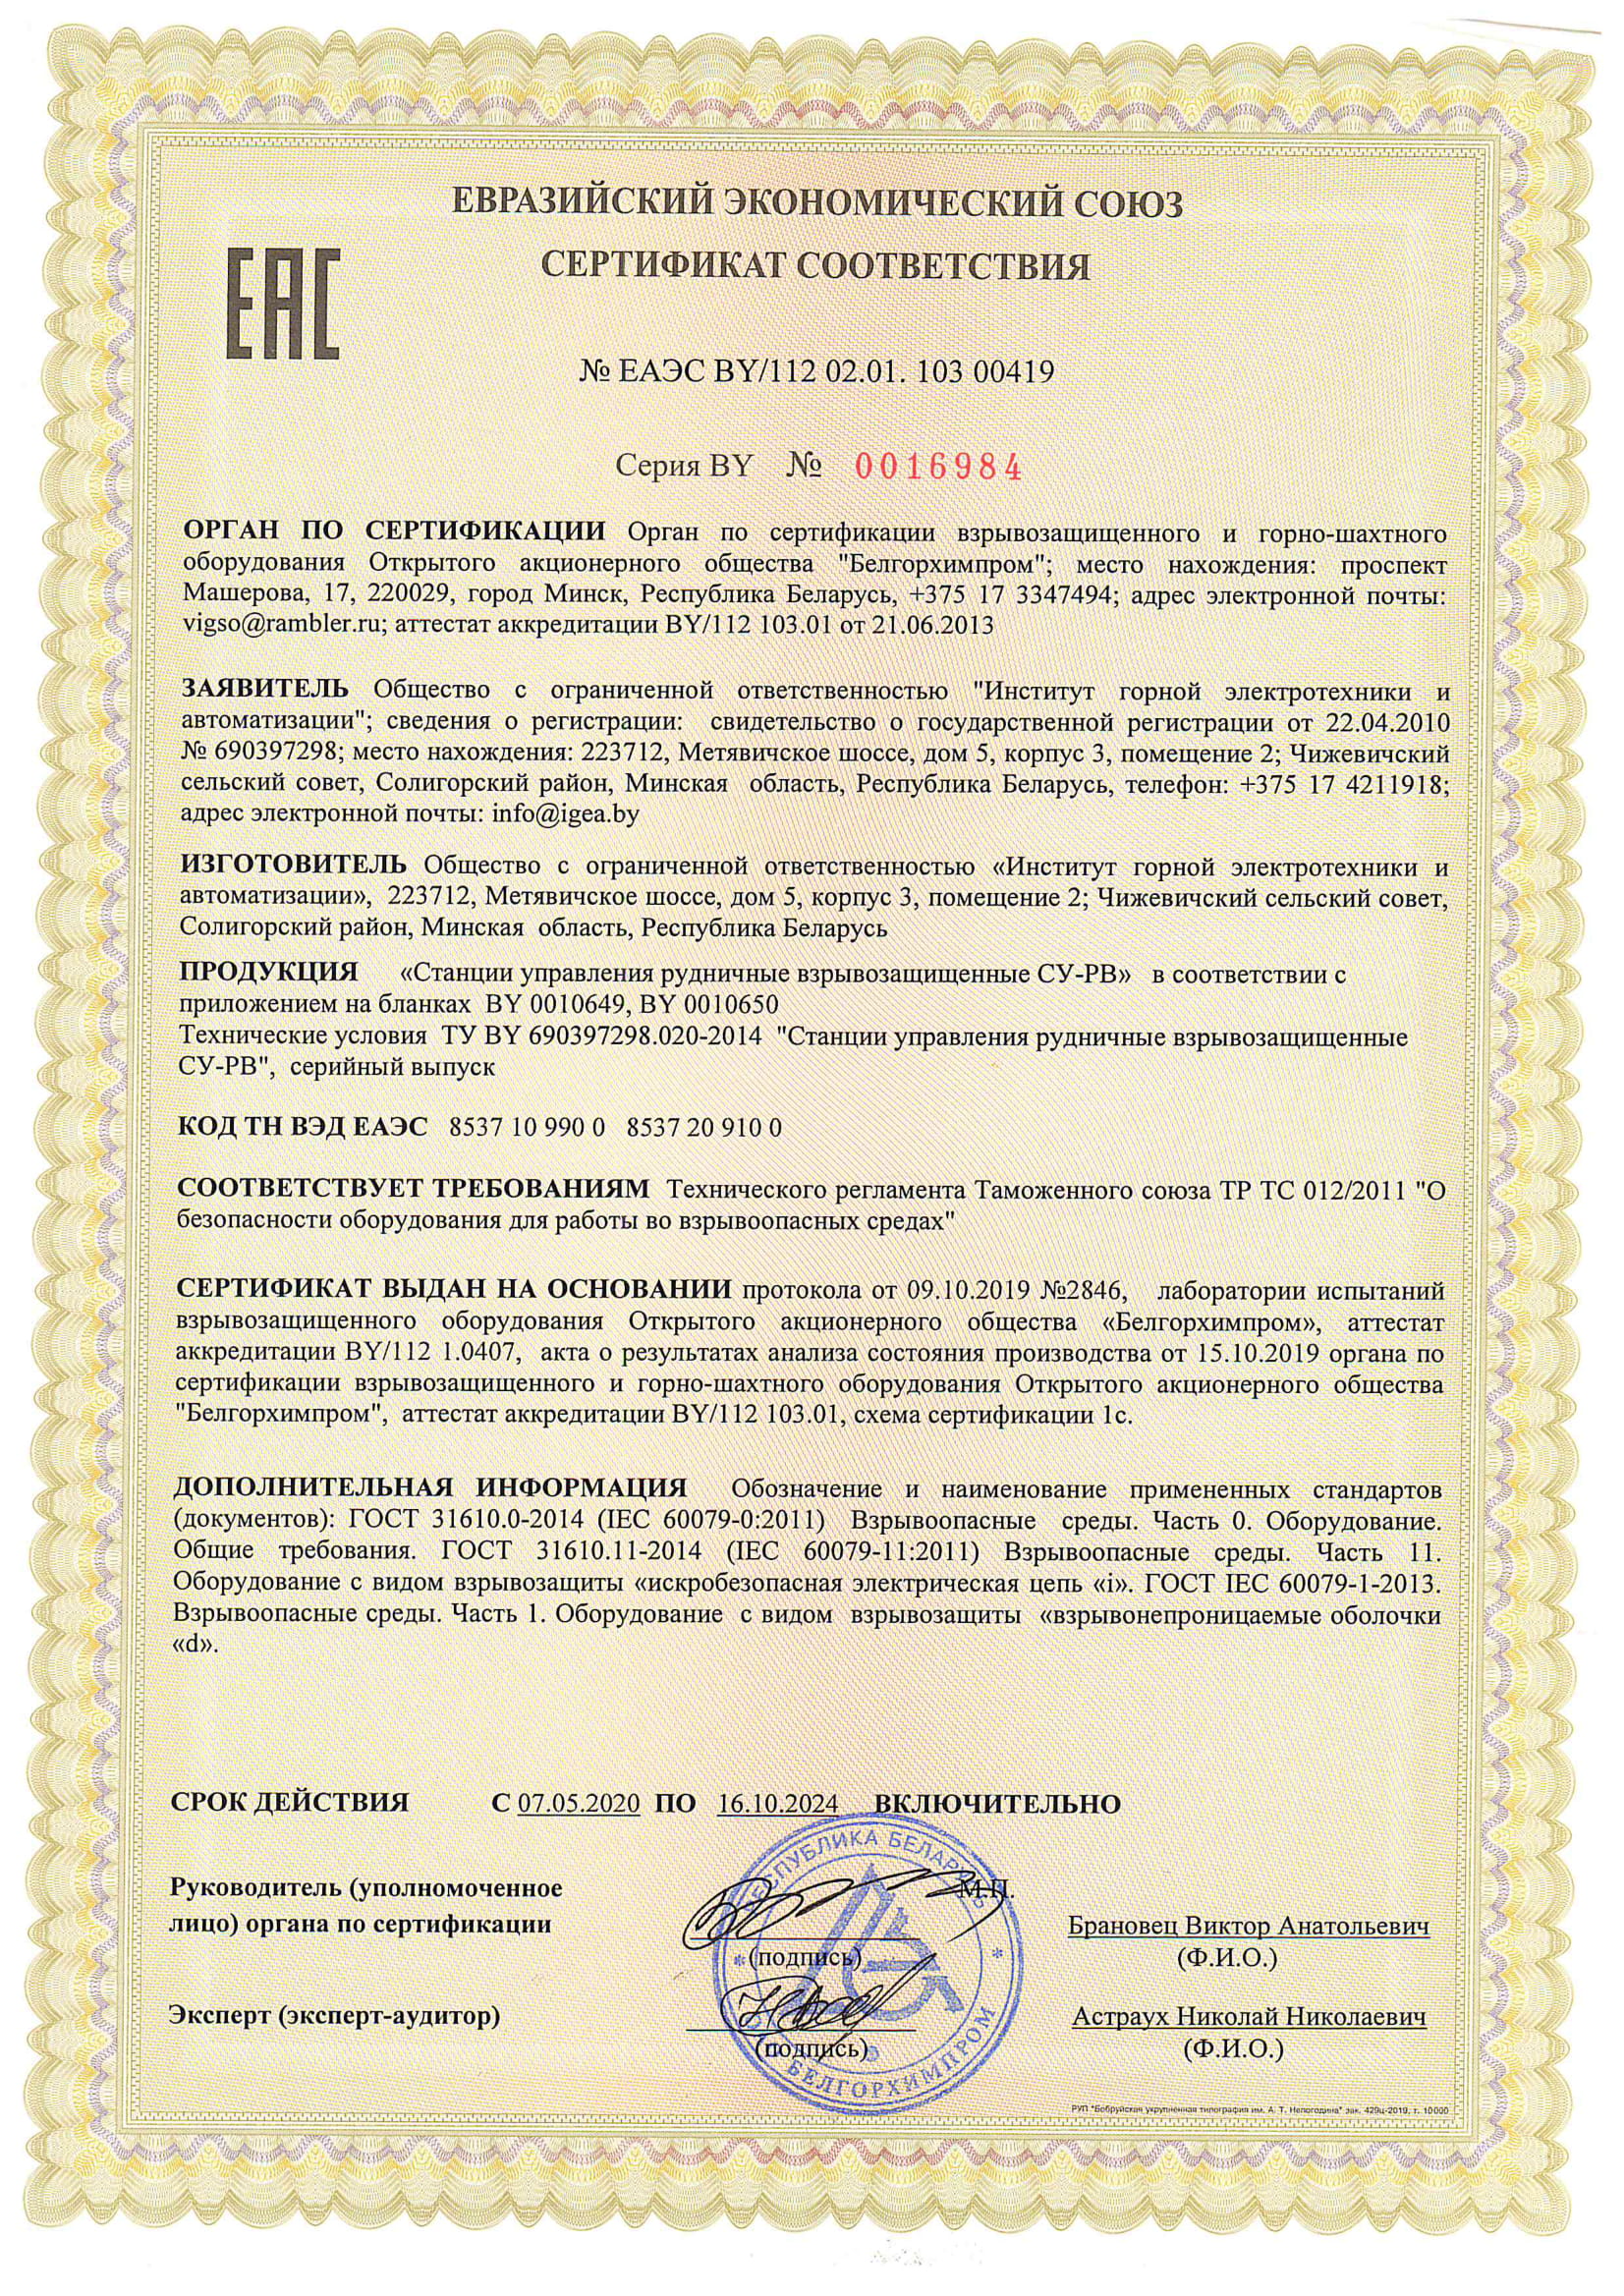 Сертификат соответствия ТР ТС 012/2011 №ЕАЭС BY/112 02.01. 103 00419 до 16.10.2024 